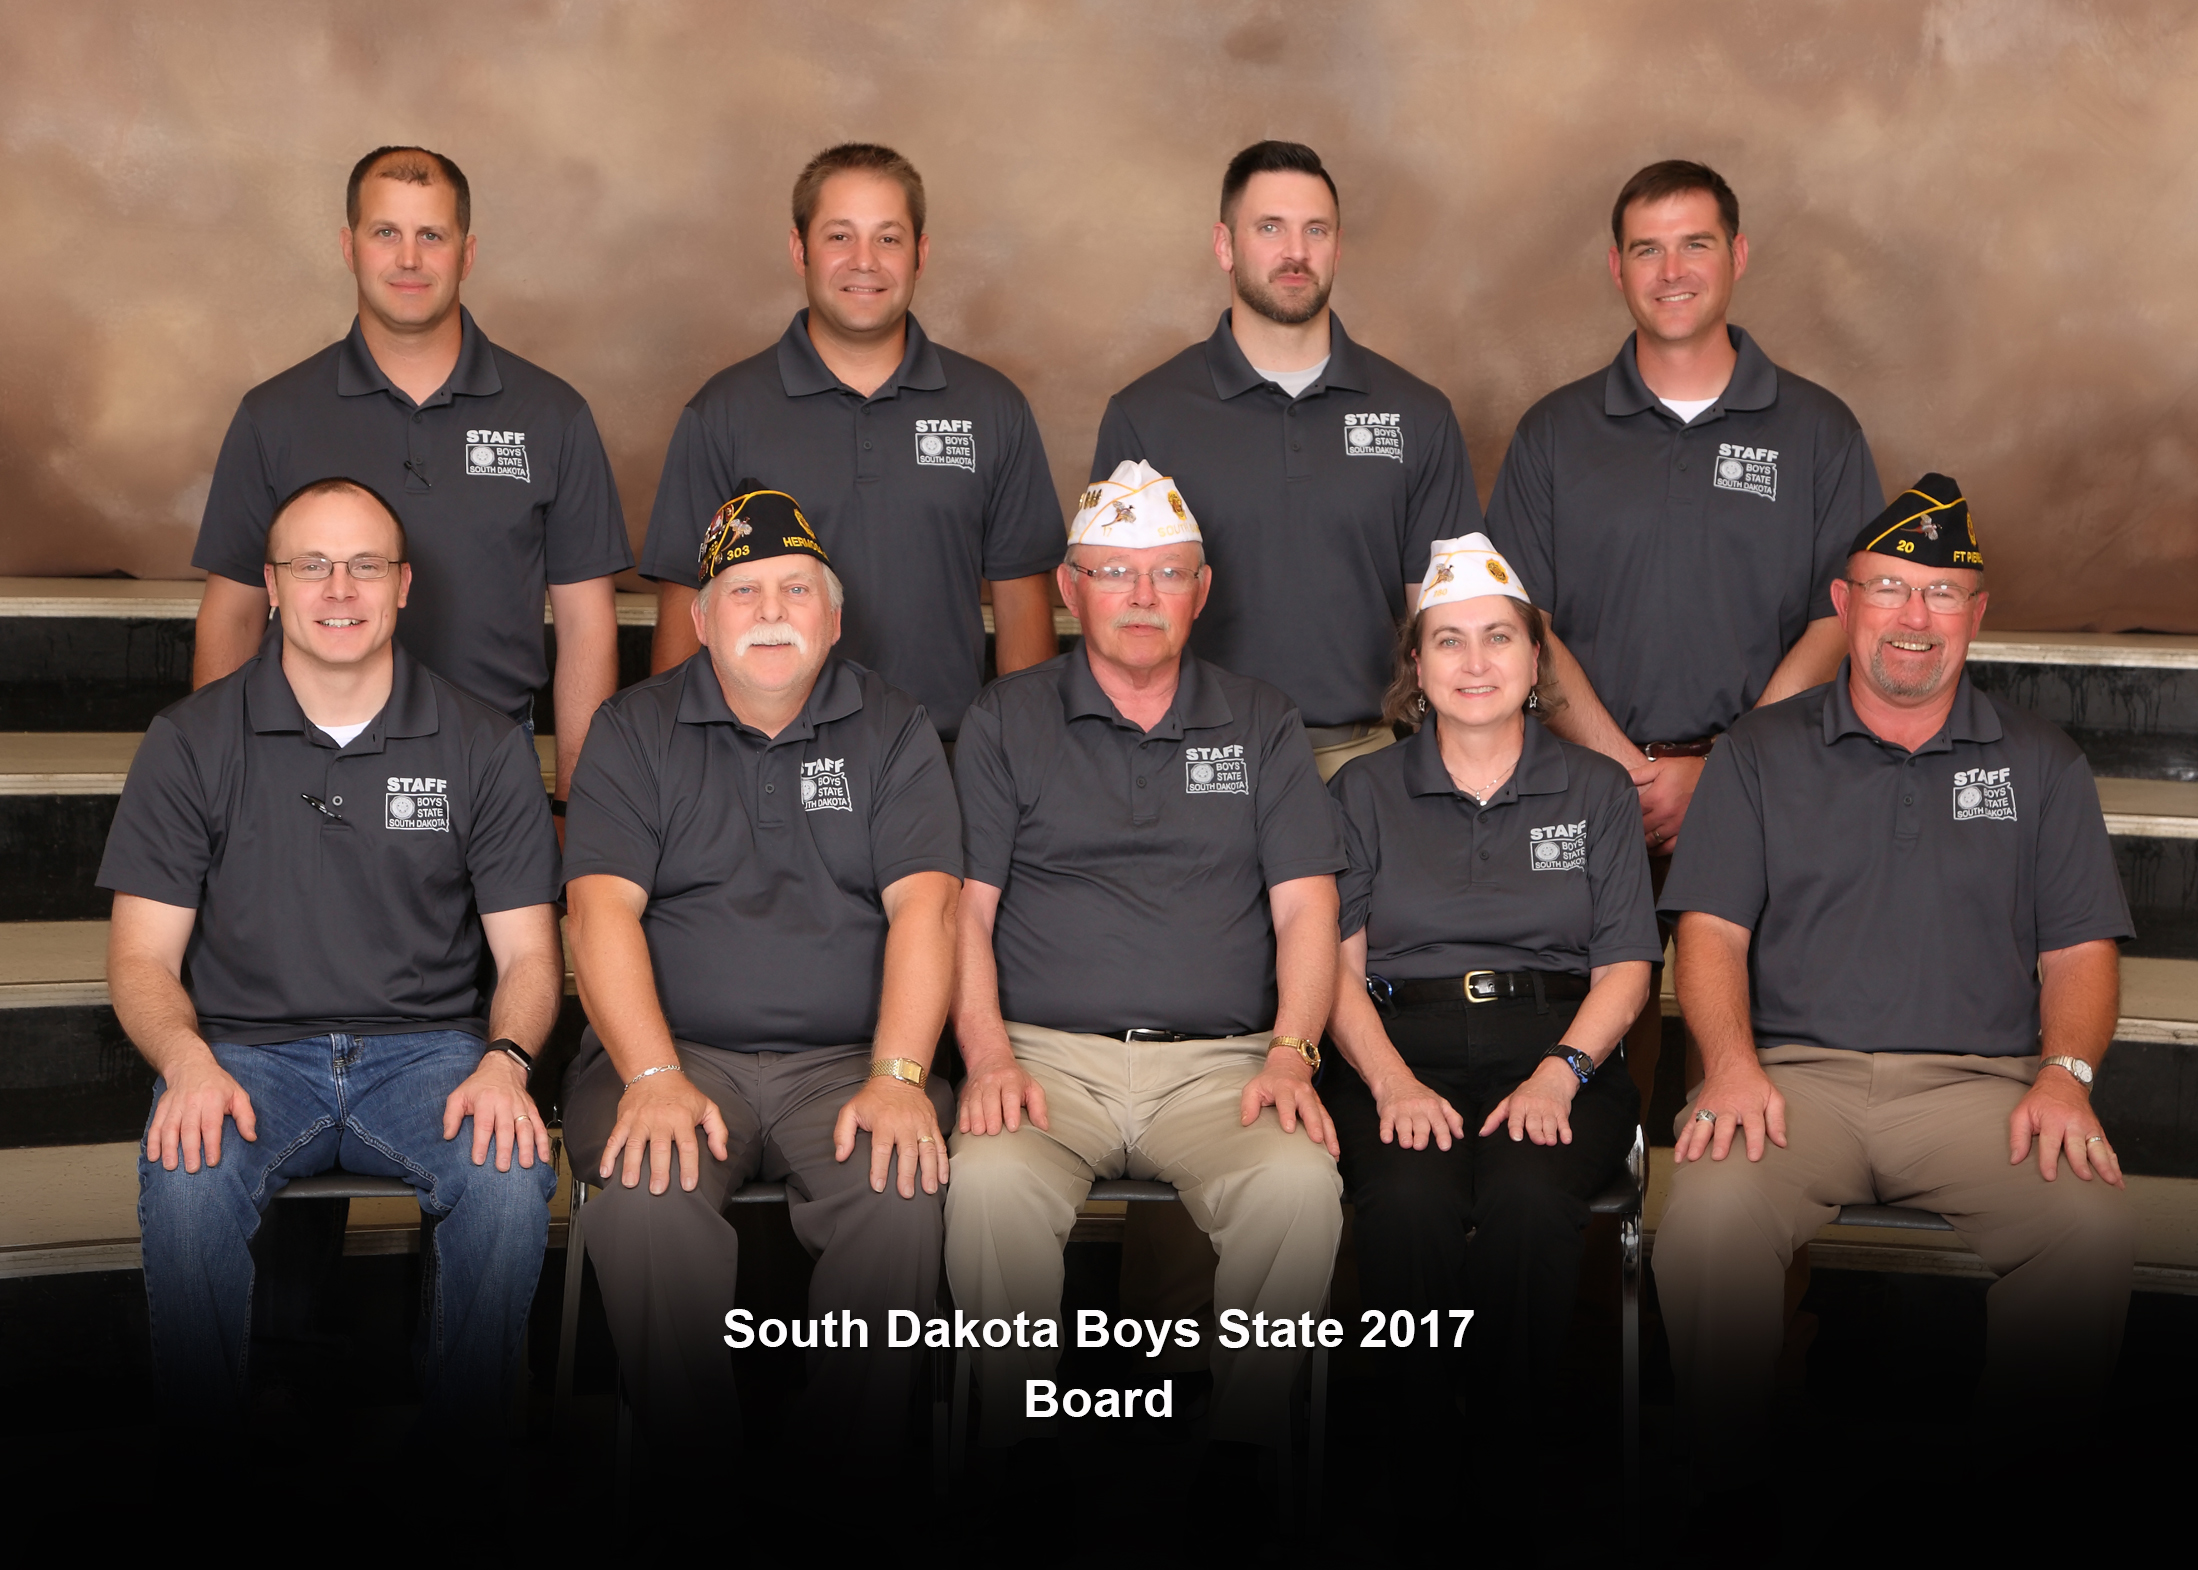 South Dakota Boys State Board 2017